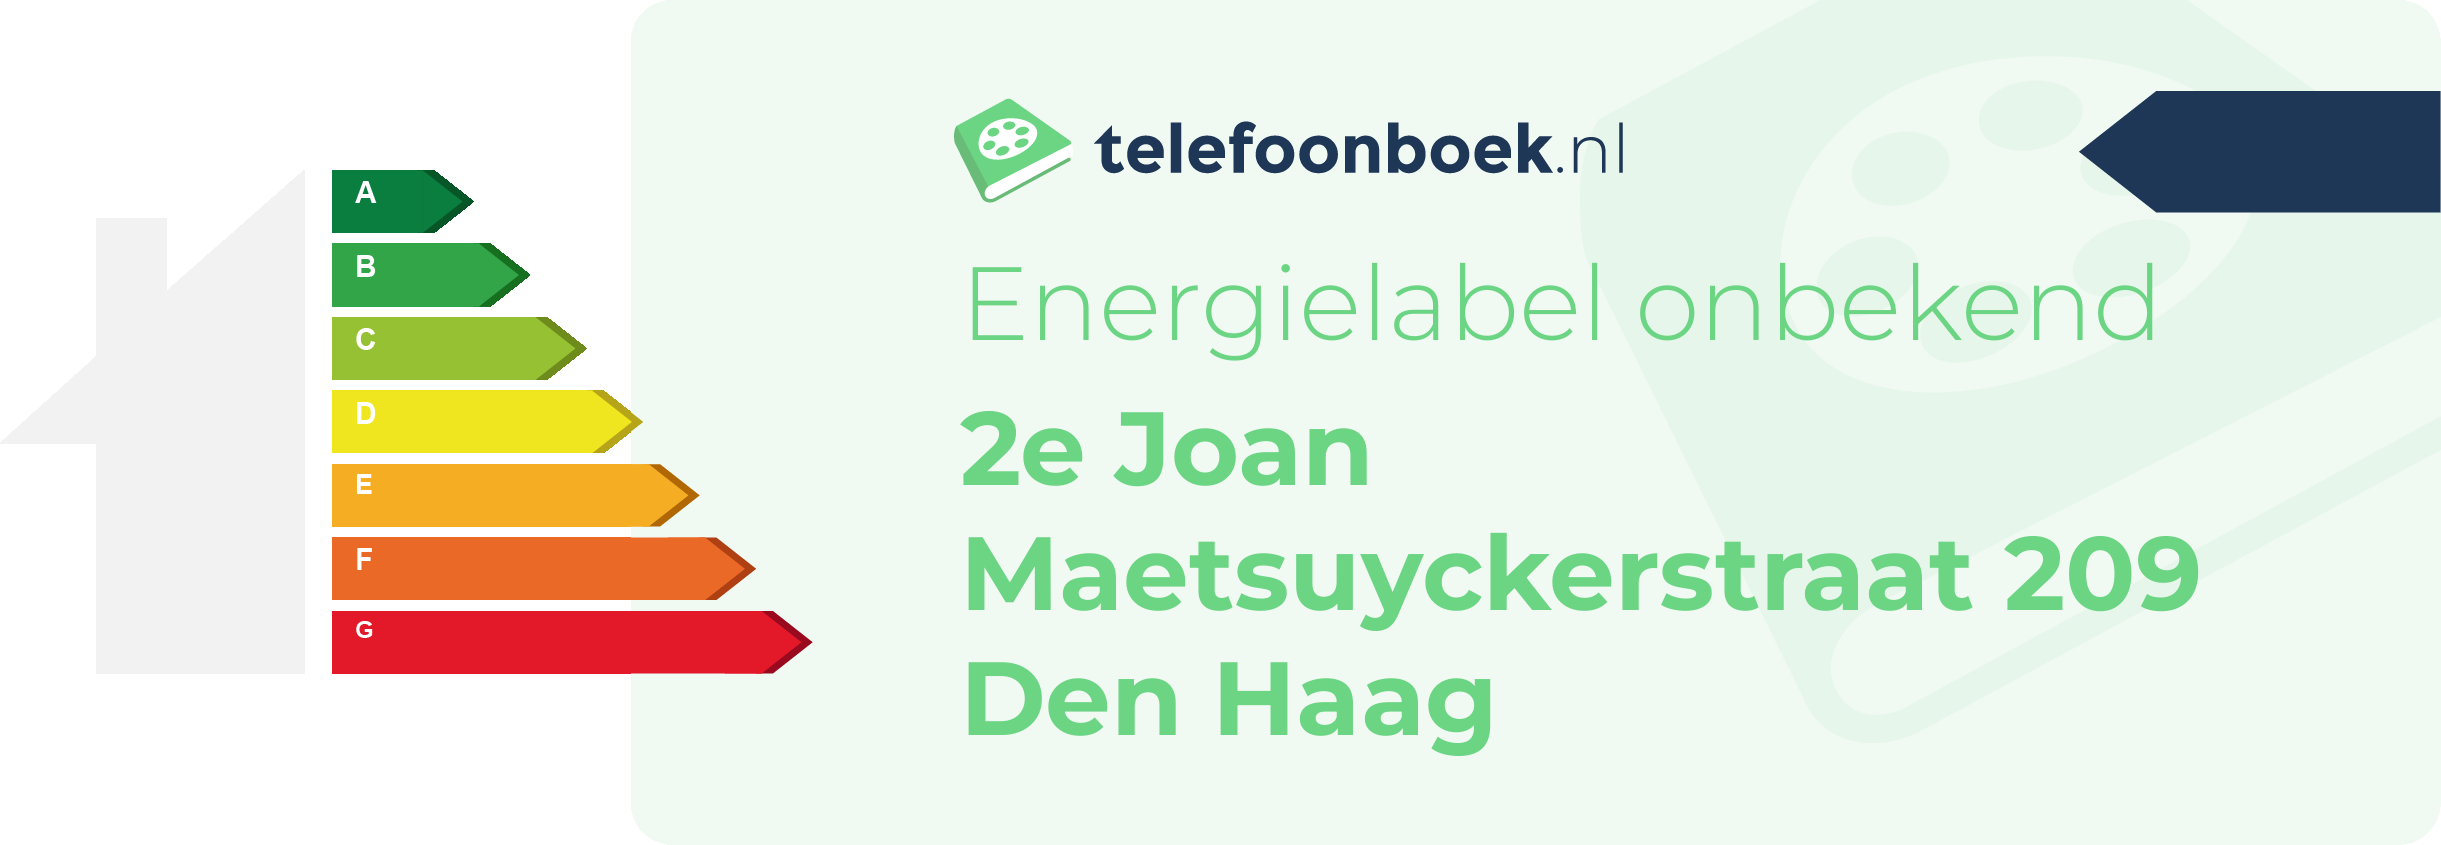 Energielabel 2e Joan Maetsuyckerstraat 209 Den Haag